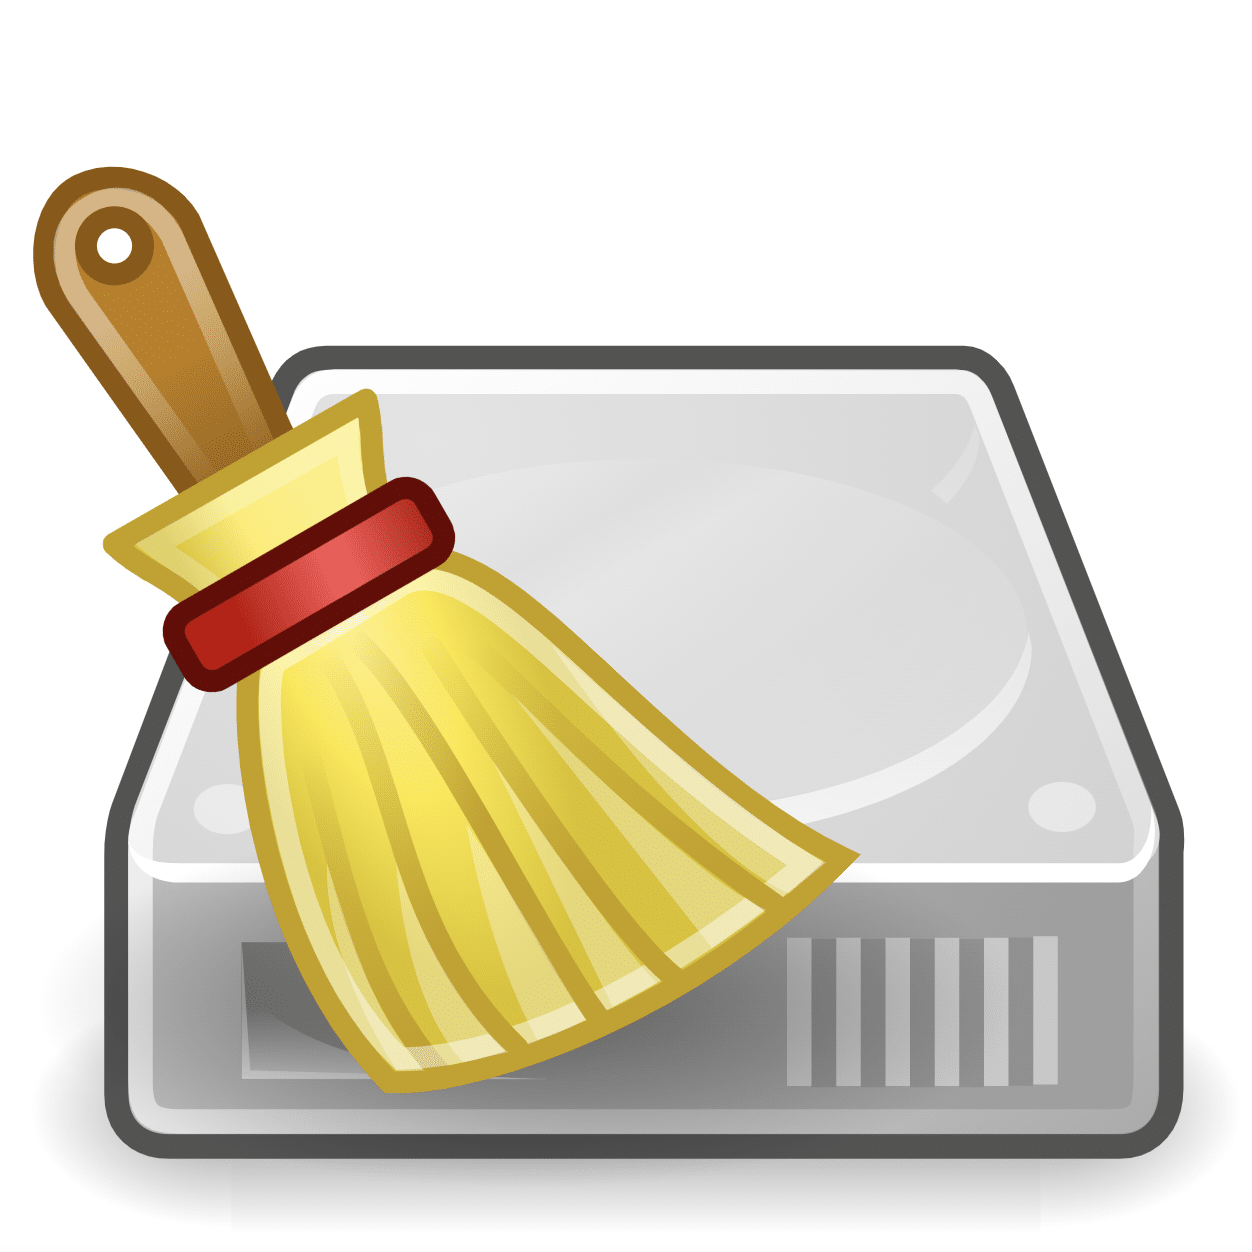 BleachBit Free Download For Windows 10 64-Bit